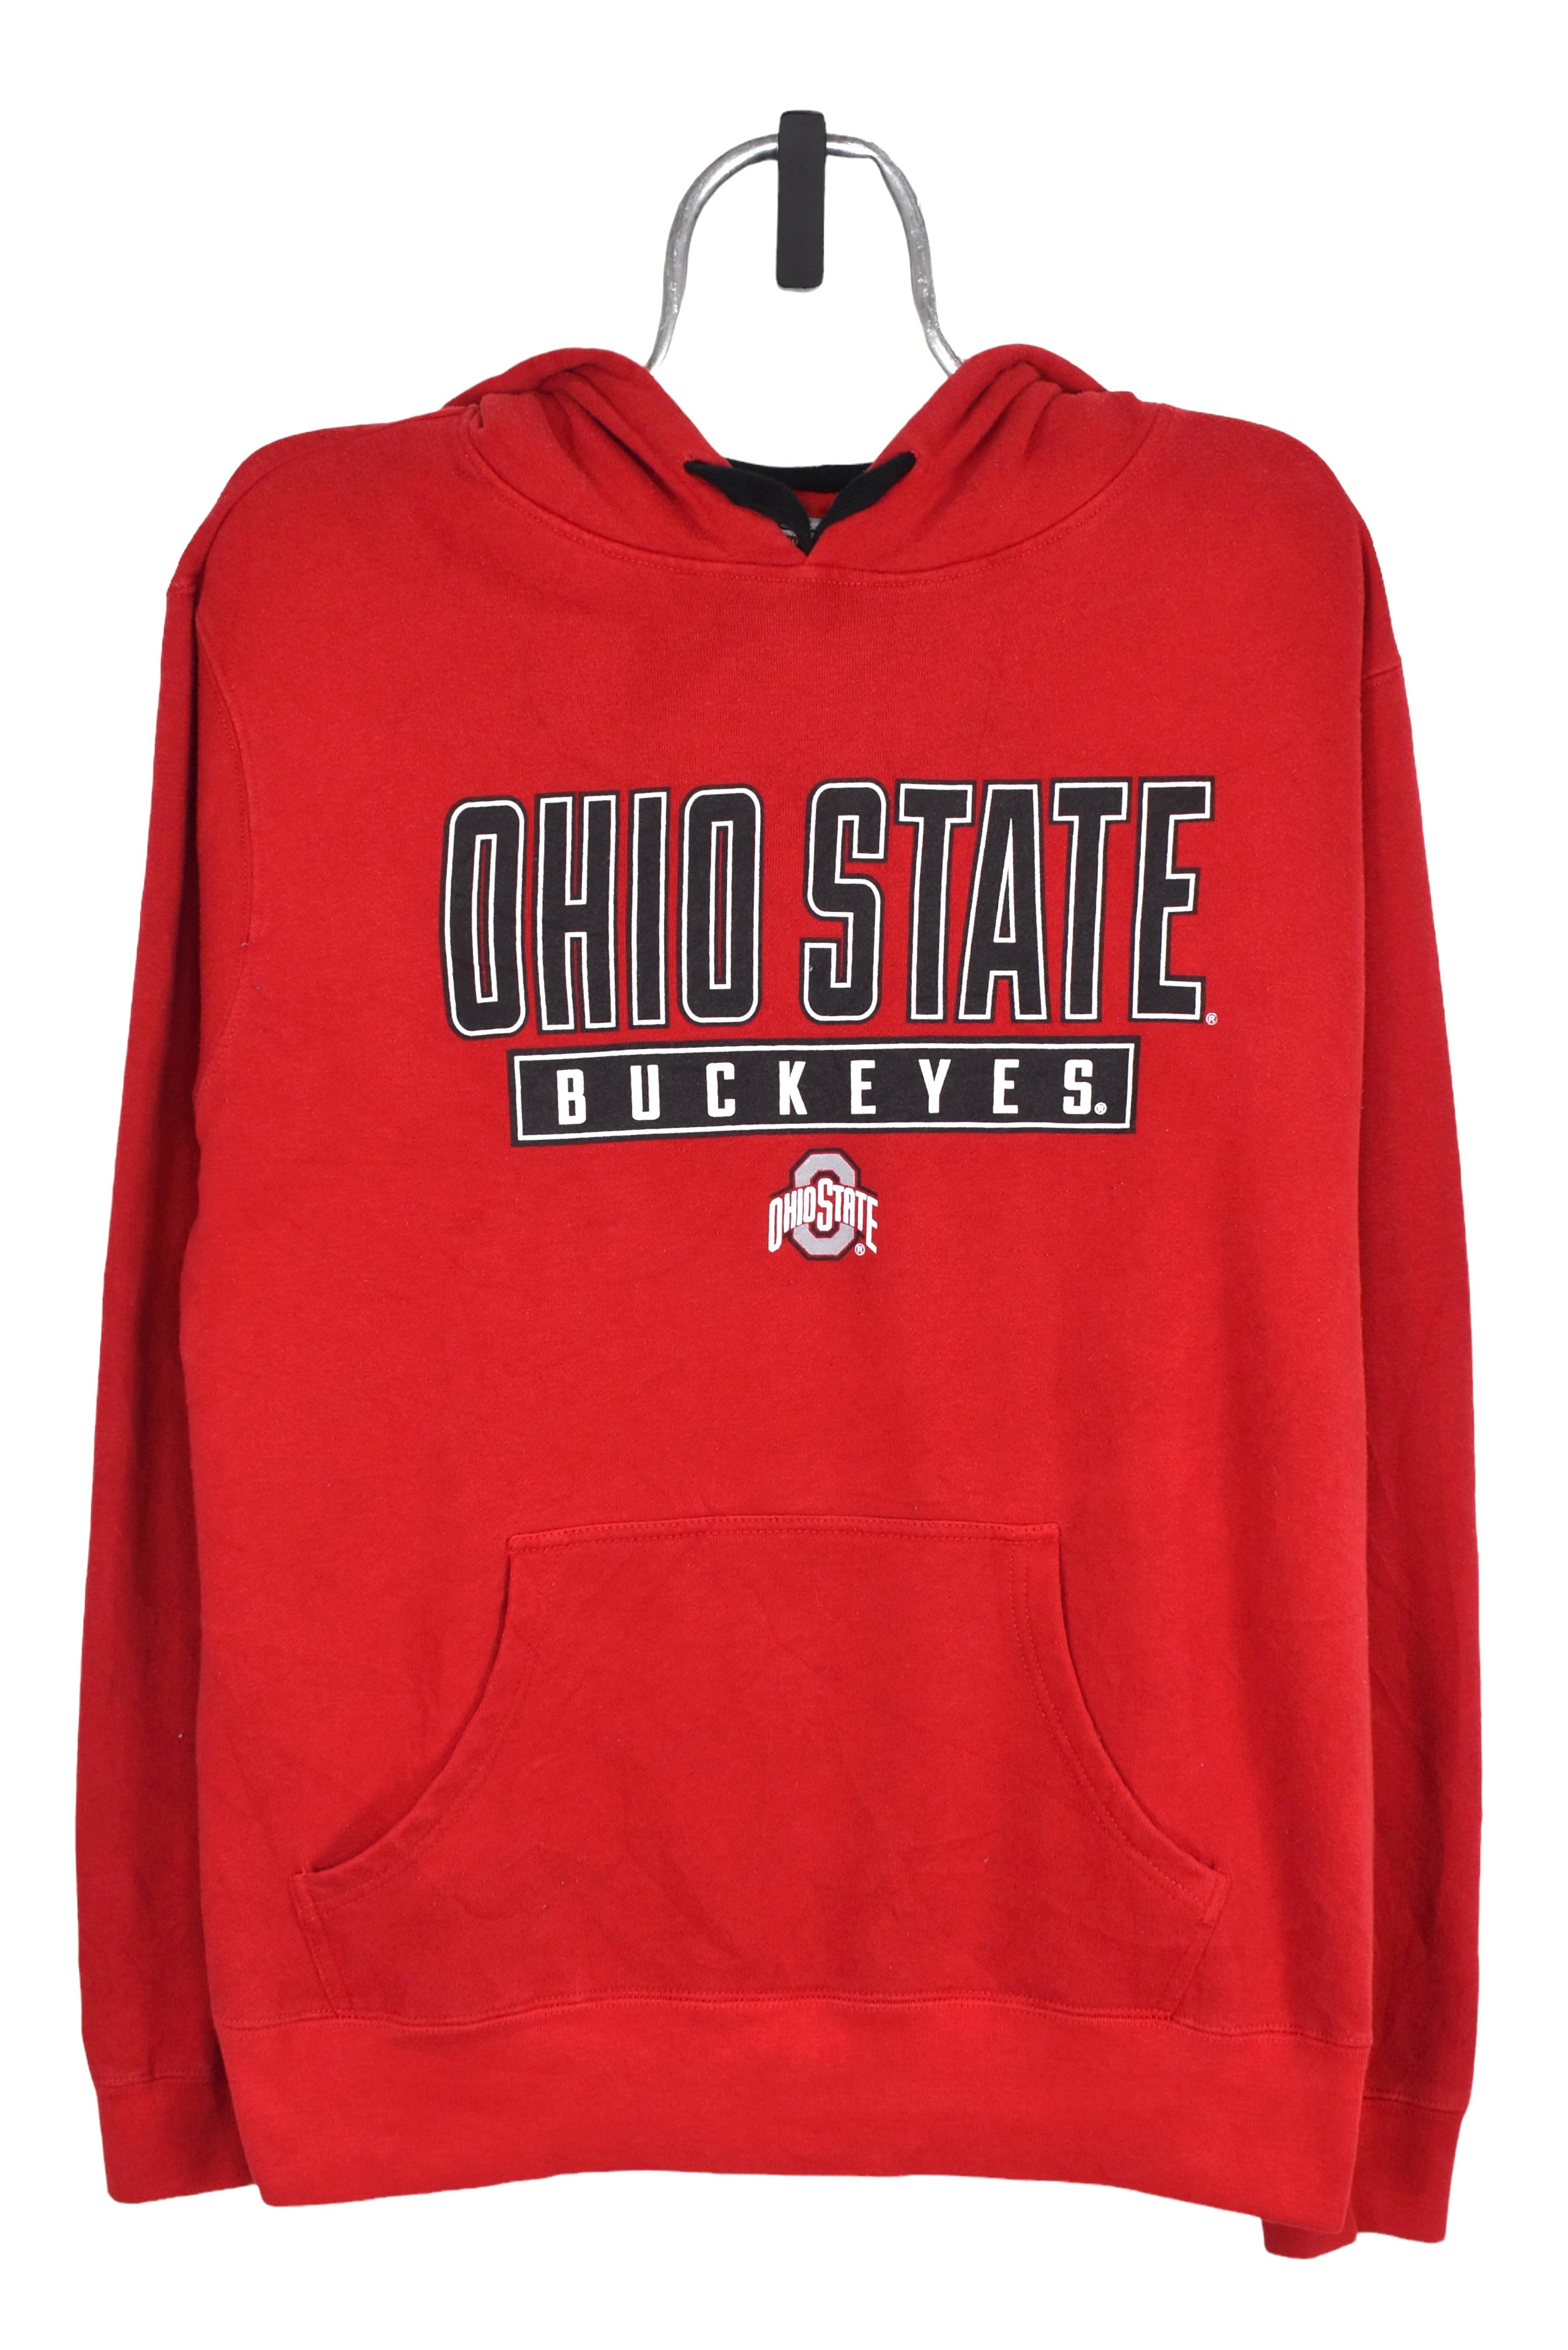 Vintage Ohio State University hoodie (L), red Buckeys graphic sweatshirt